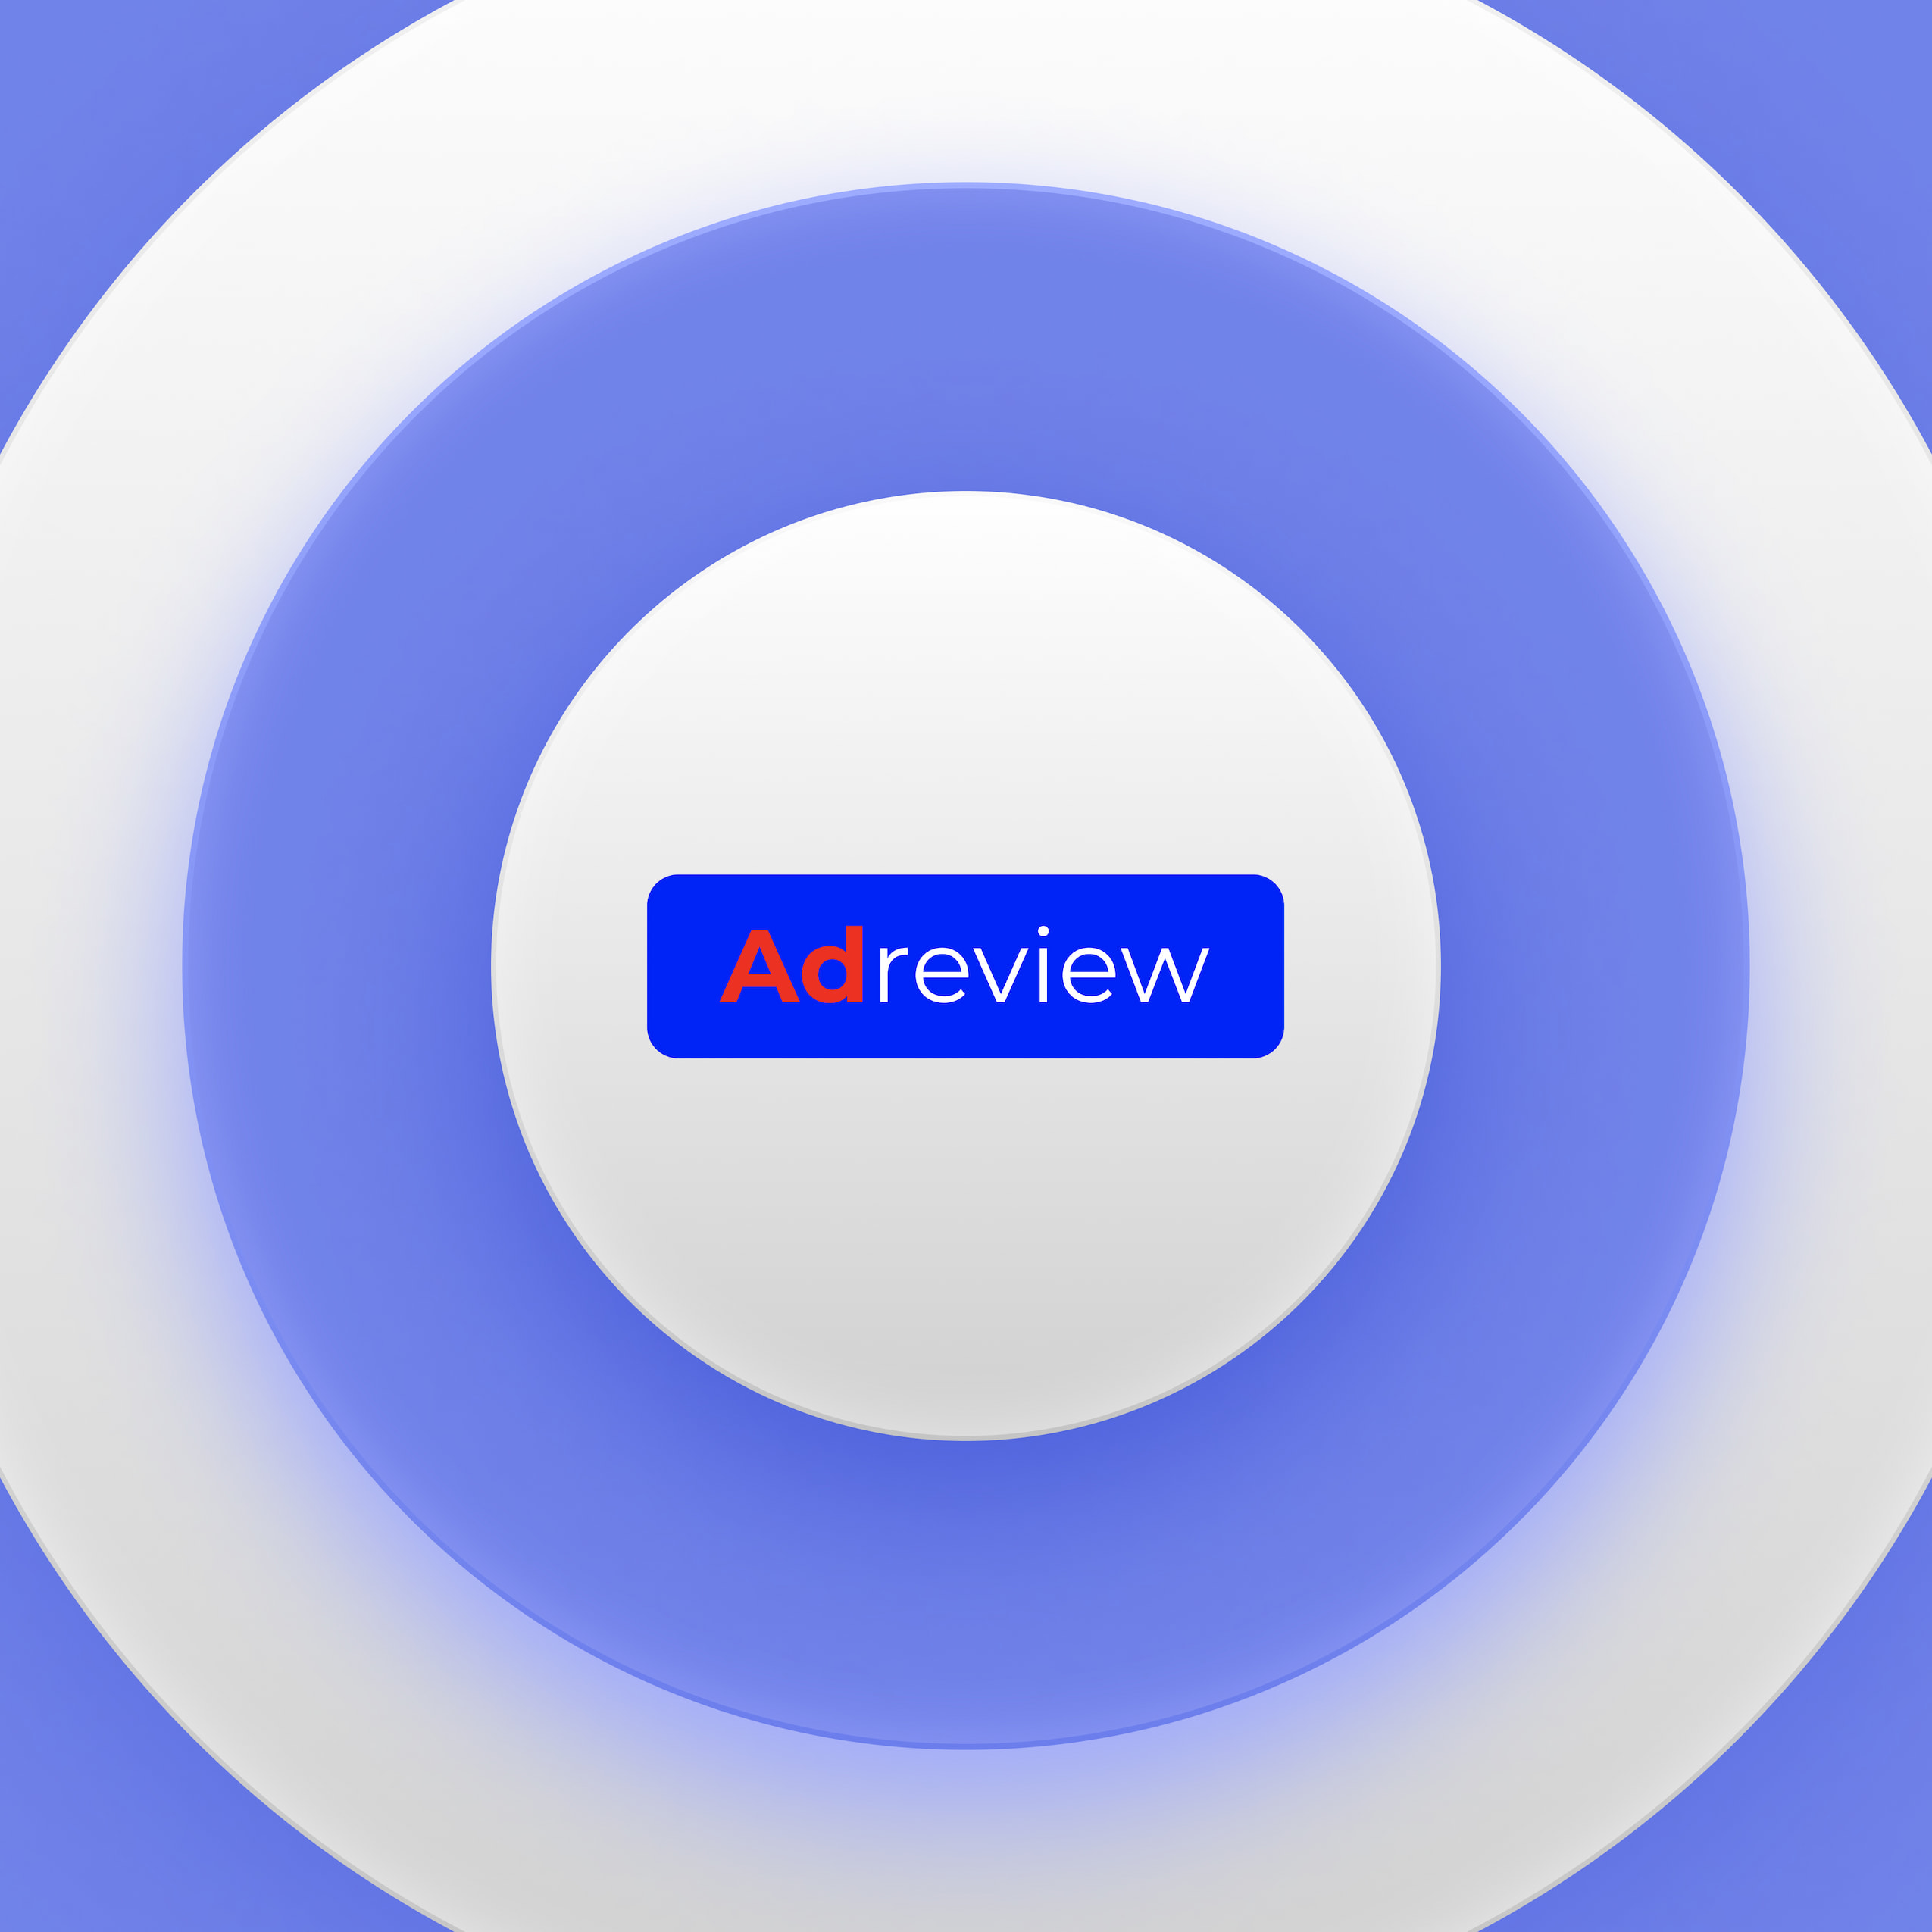 MarTech-система Adreview на основе компьютерного зрения